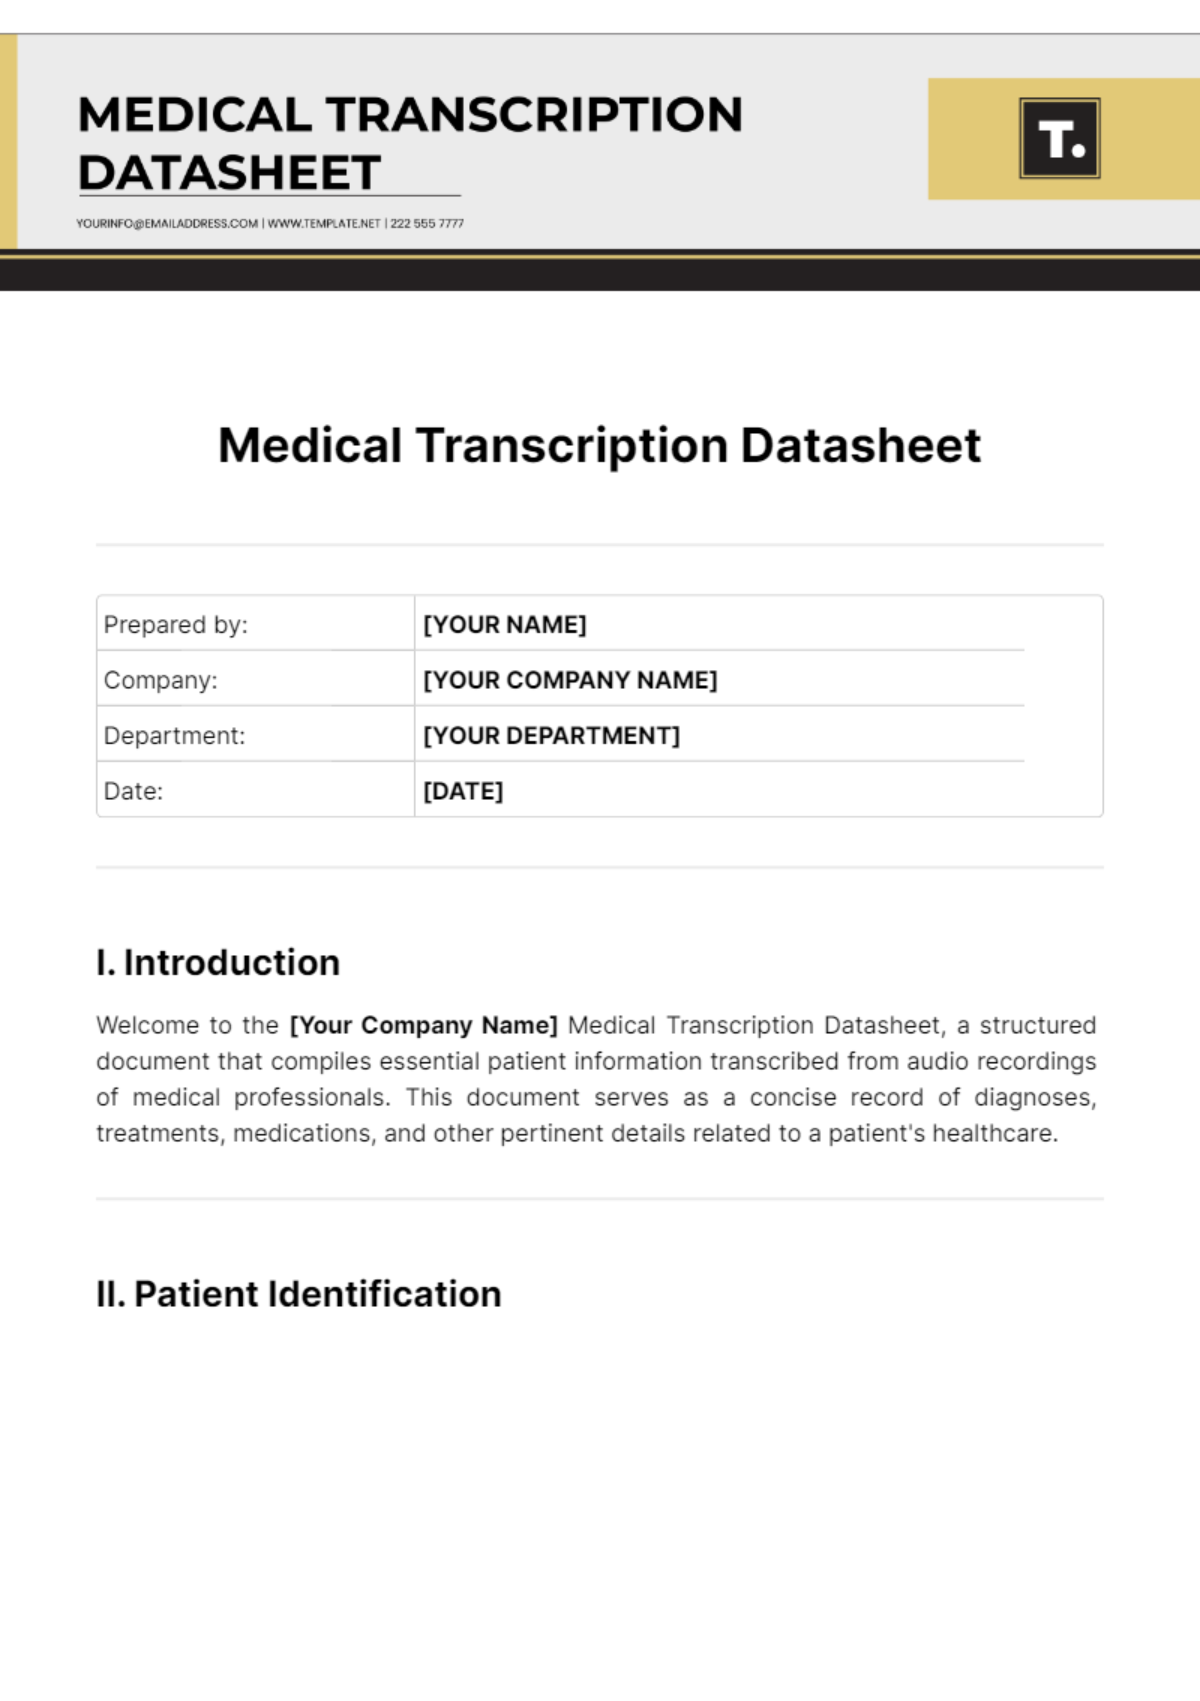 Medical Transcription Datasheet Template